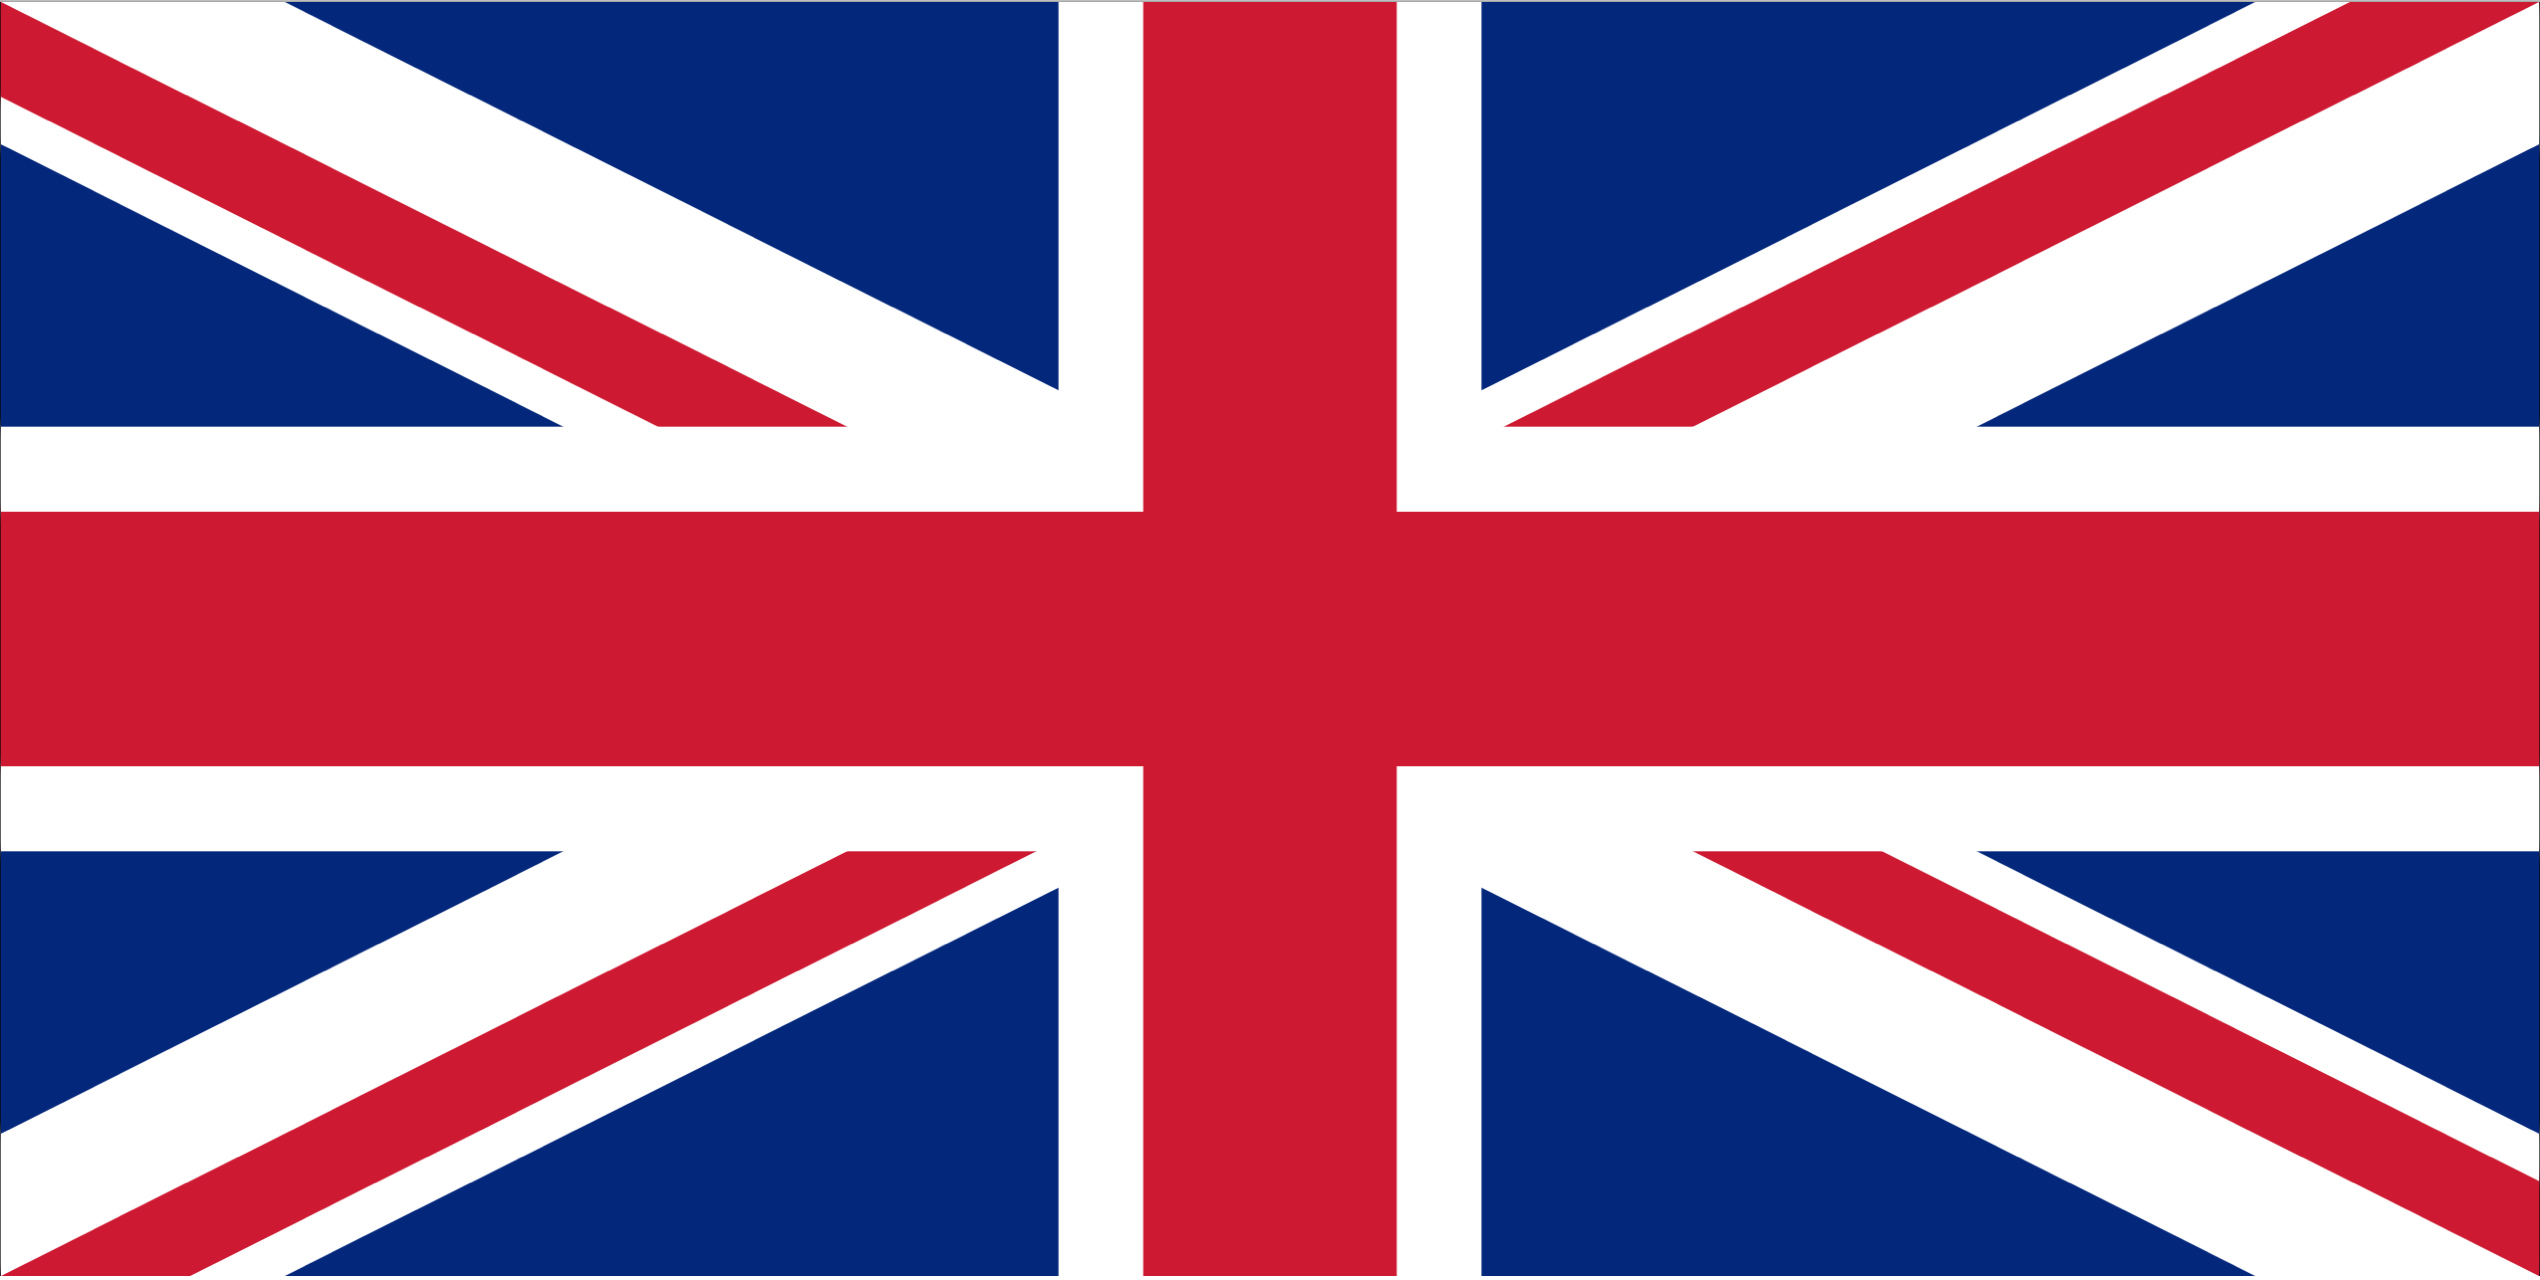 The flag of the United Kingdom